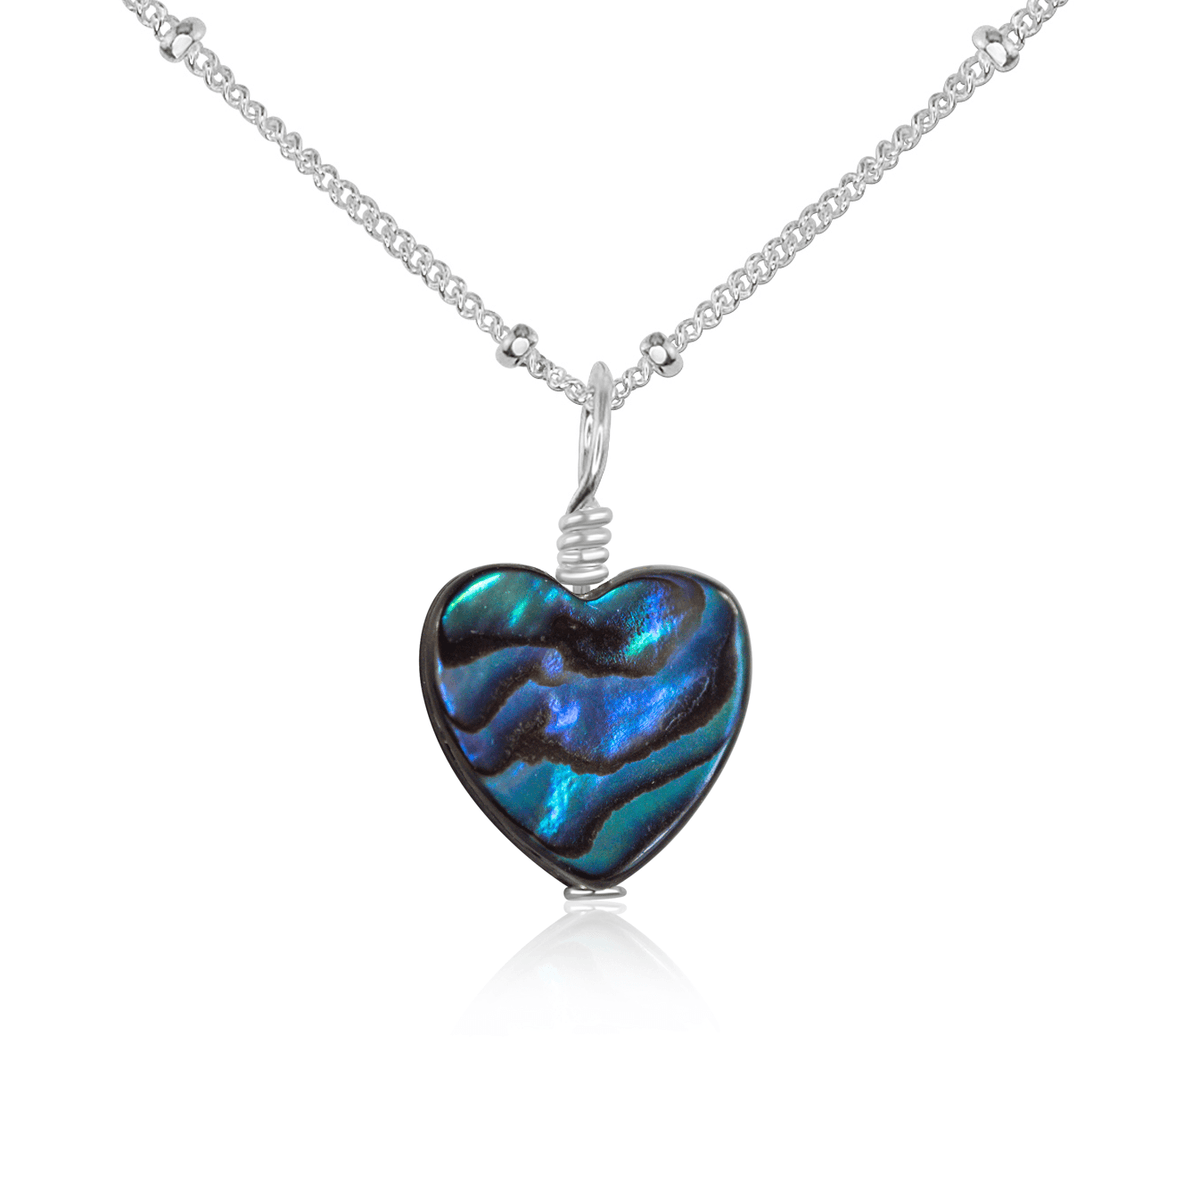 Abalone Shell Heart Pendant Necklace - Abalone Shell Heart Pendant Necklace - Sterling Silver / Satellite - Luna Tide Handmade Crystal Jewellery